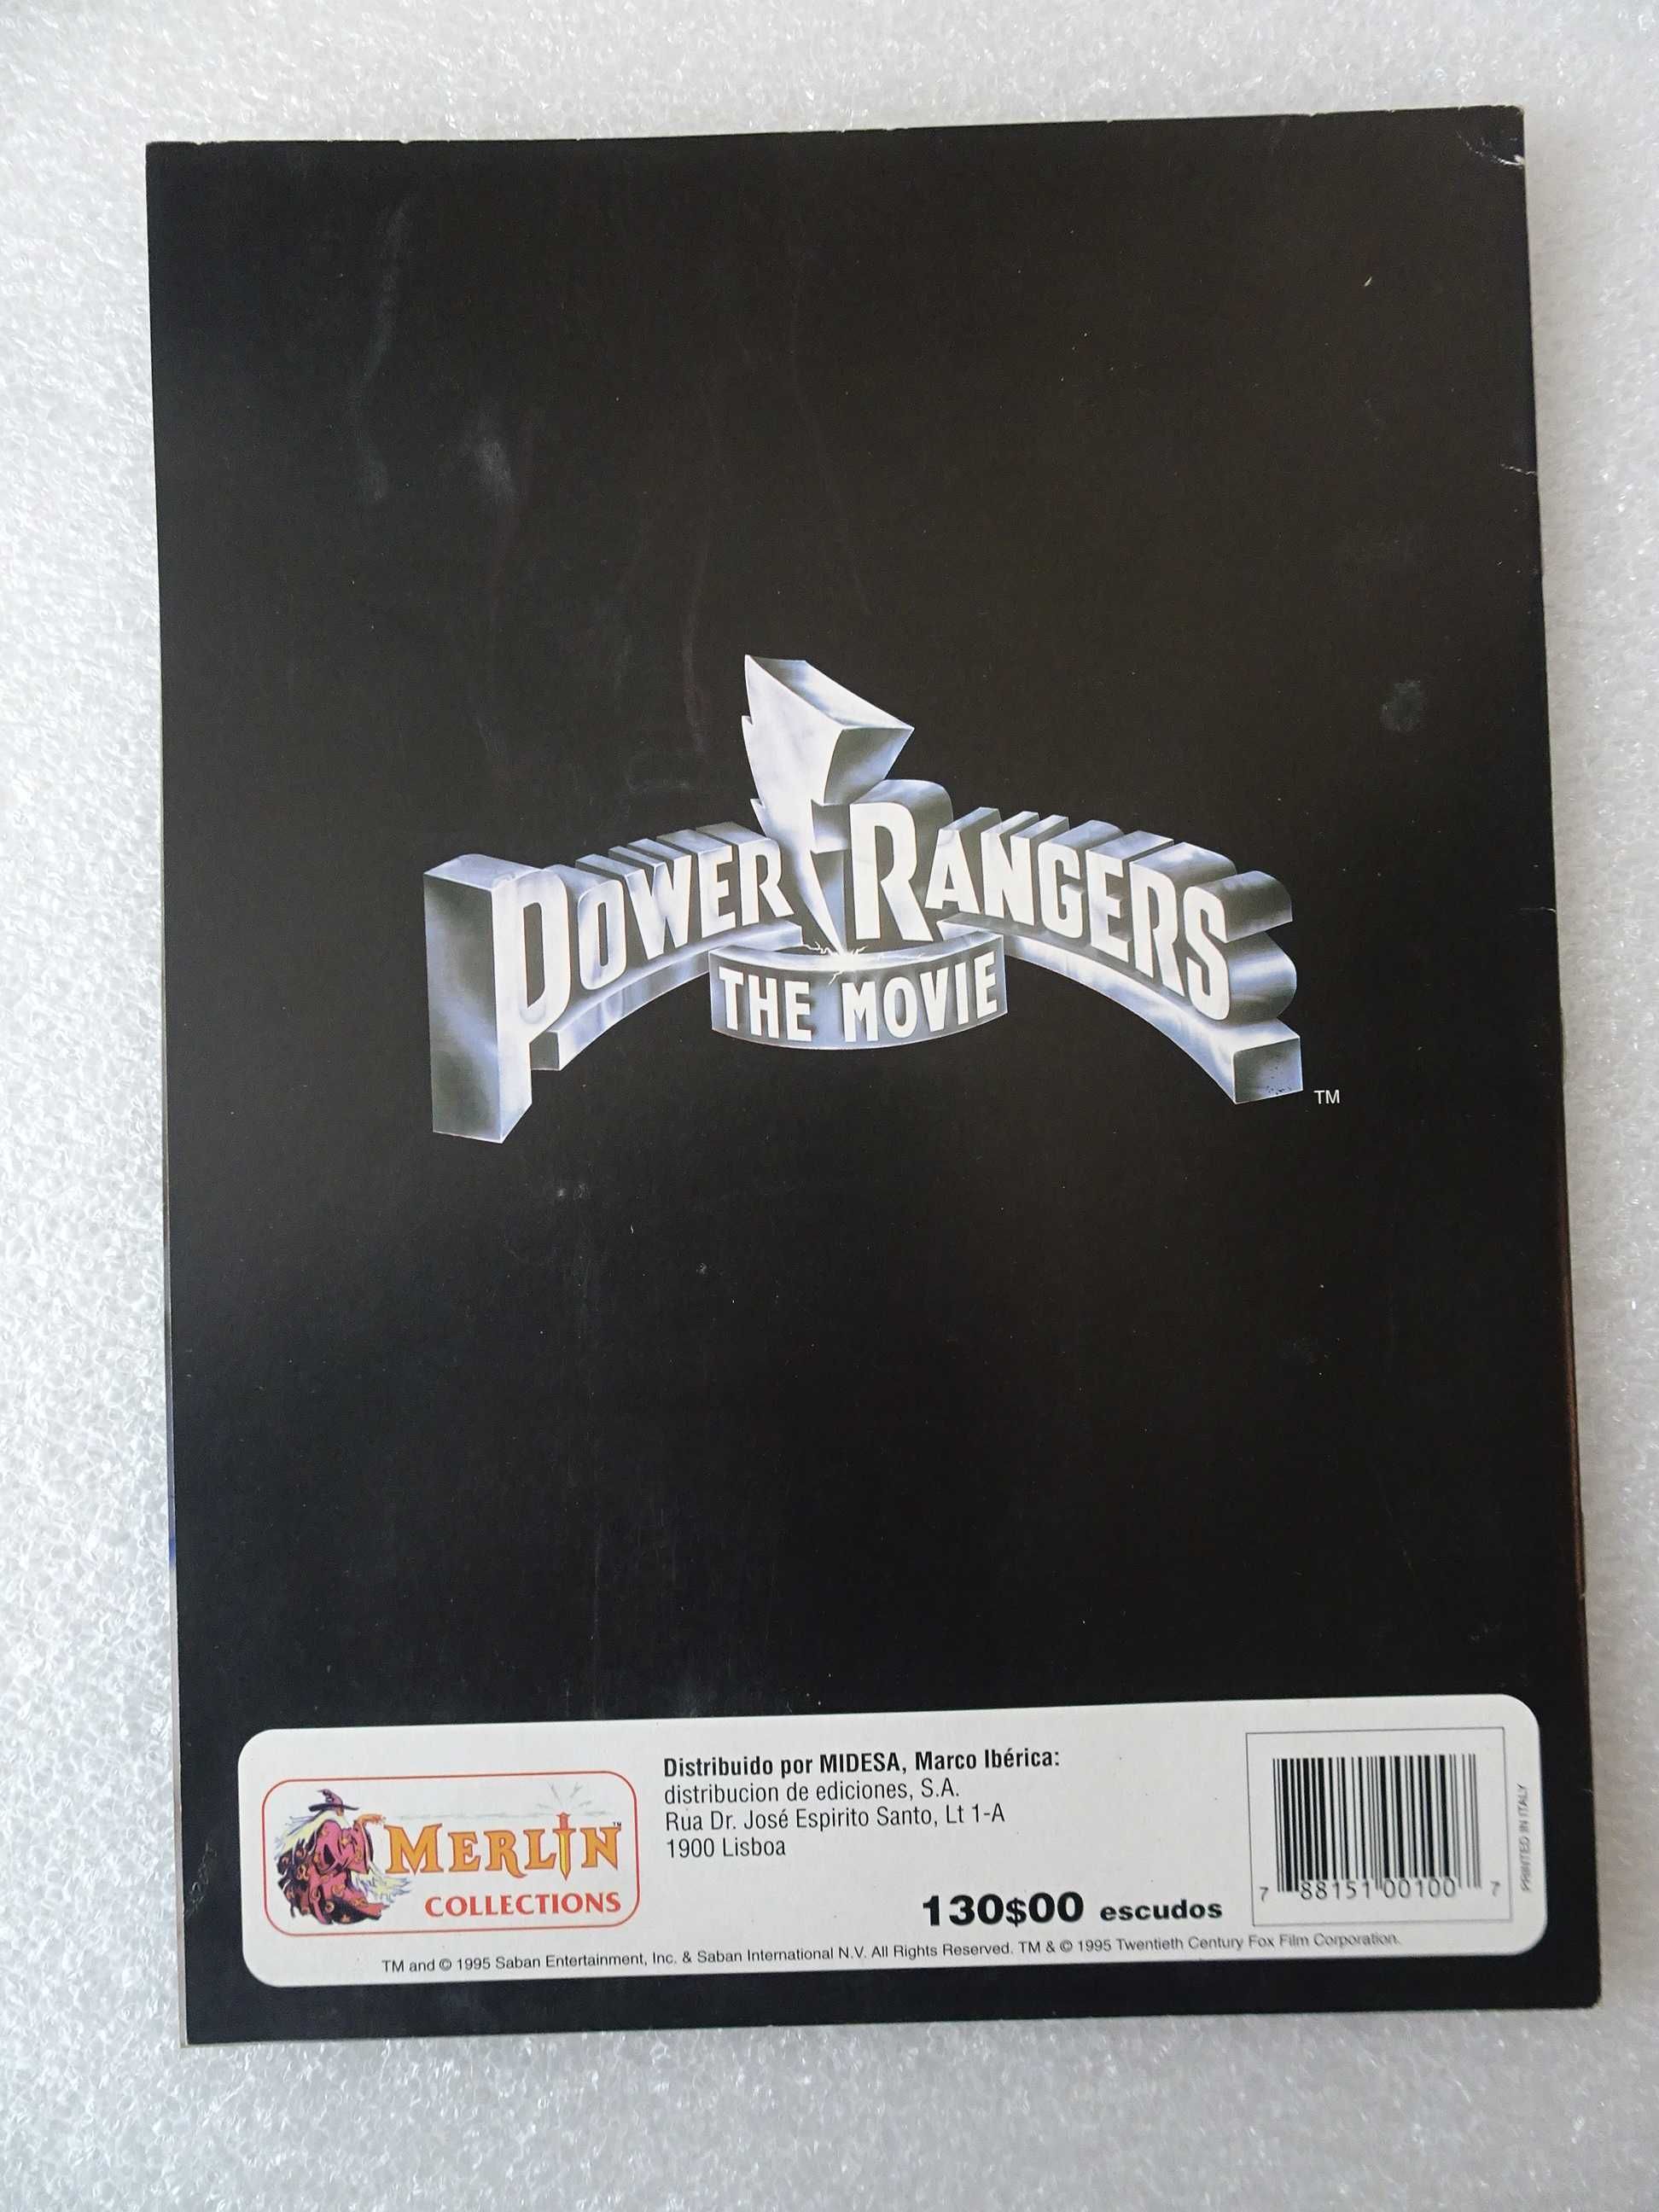 Caderneta de cromos vazia Power Rangers - The Movie Merlin Collections